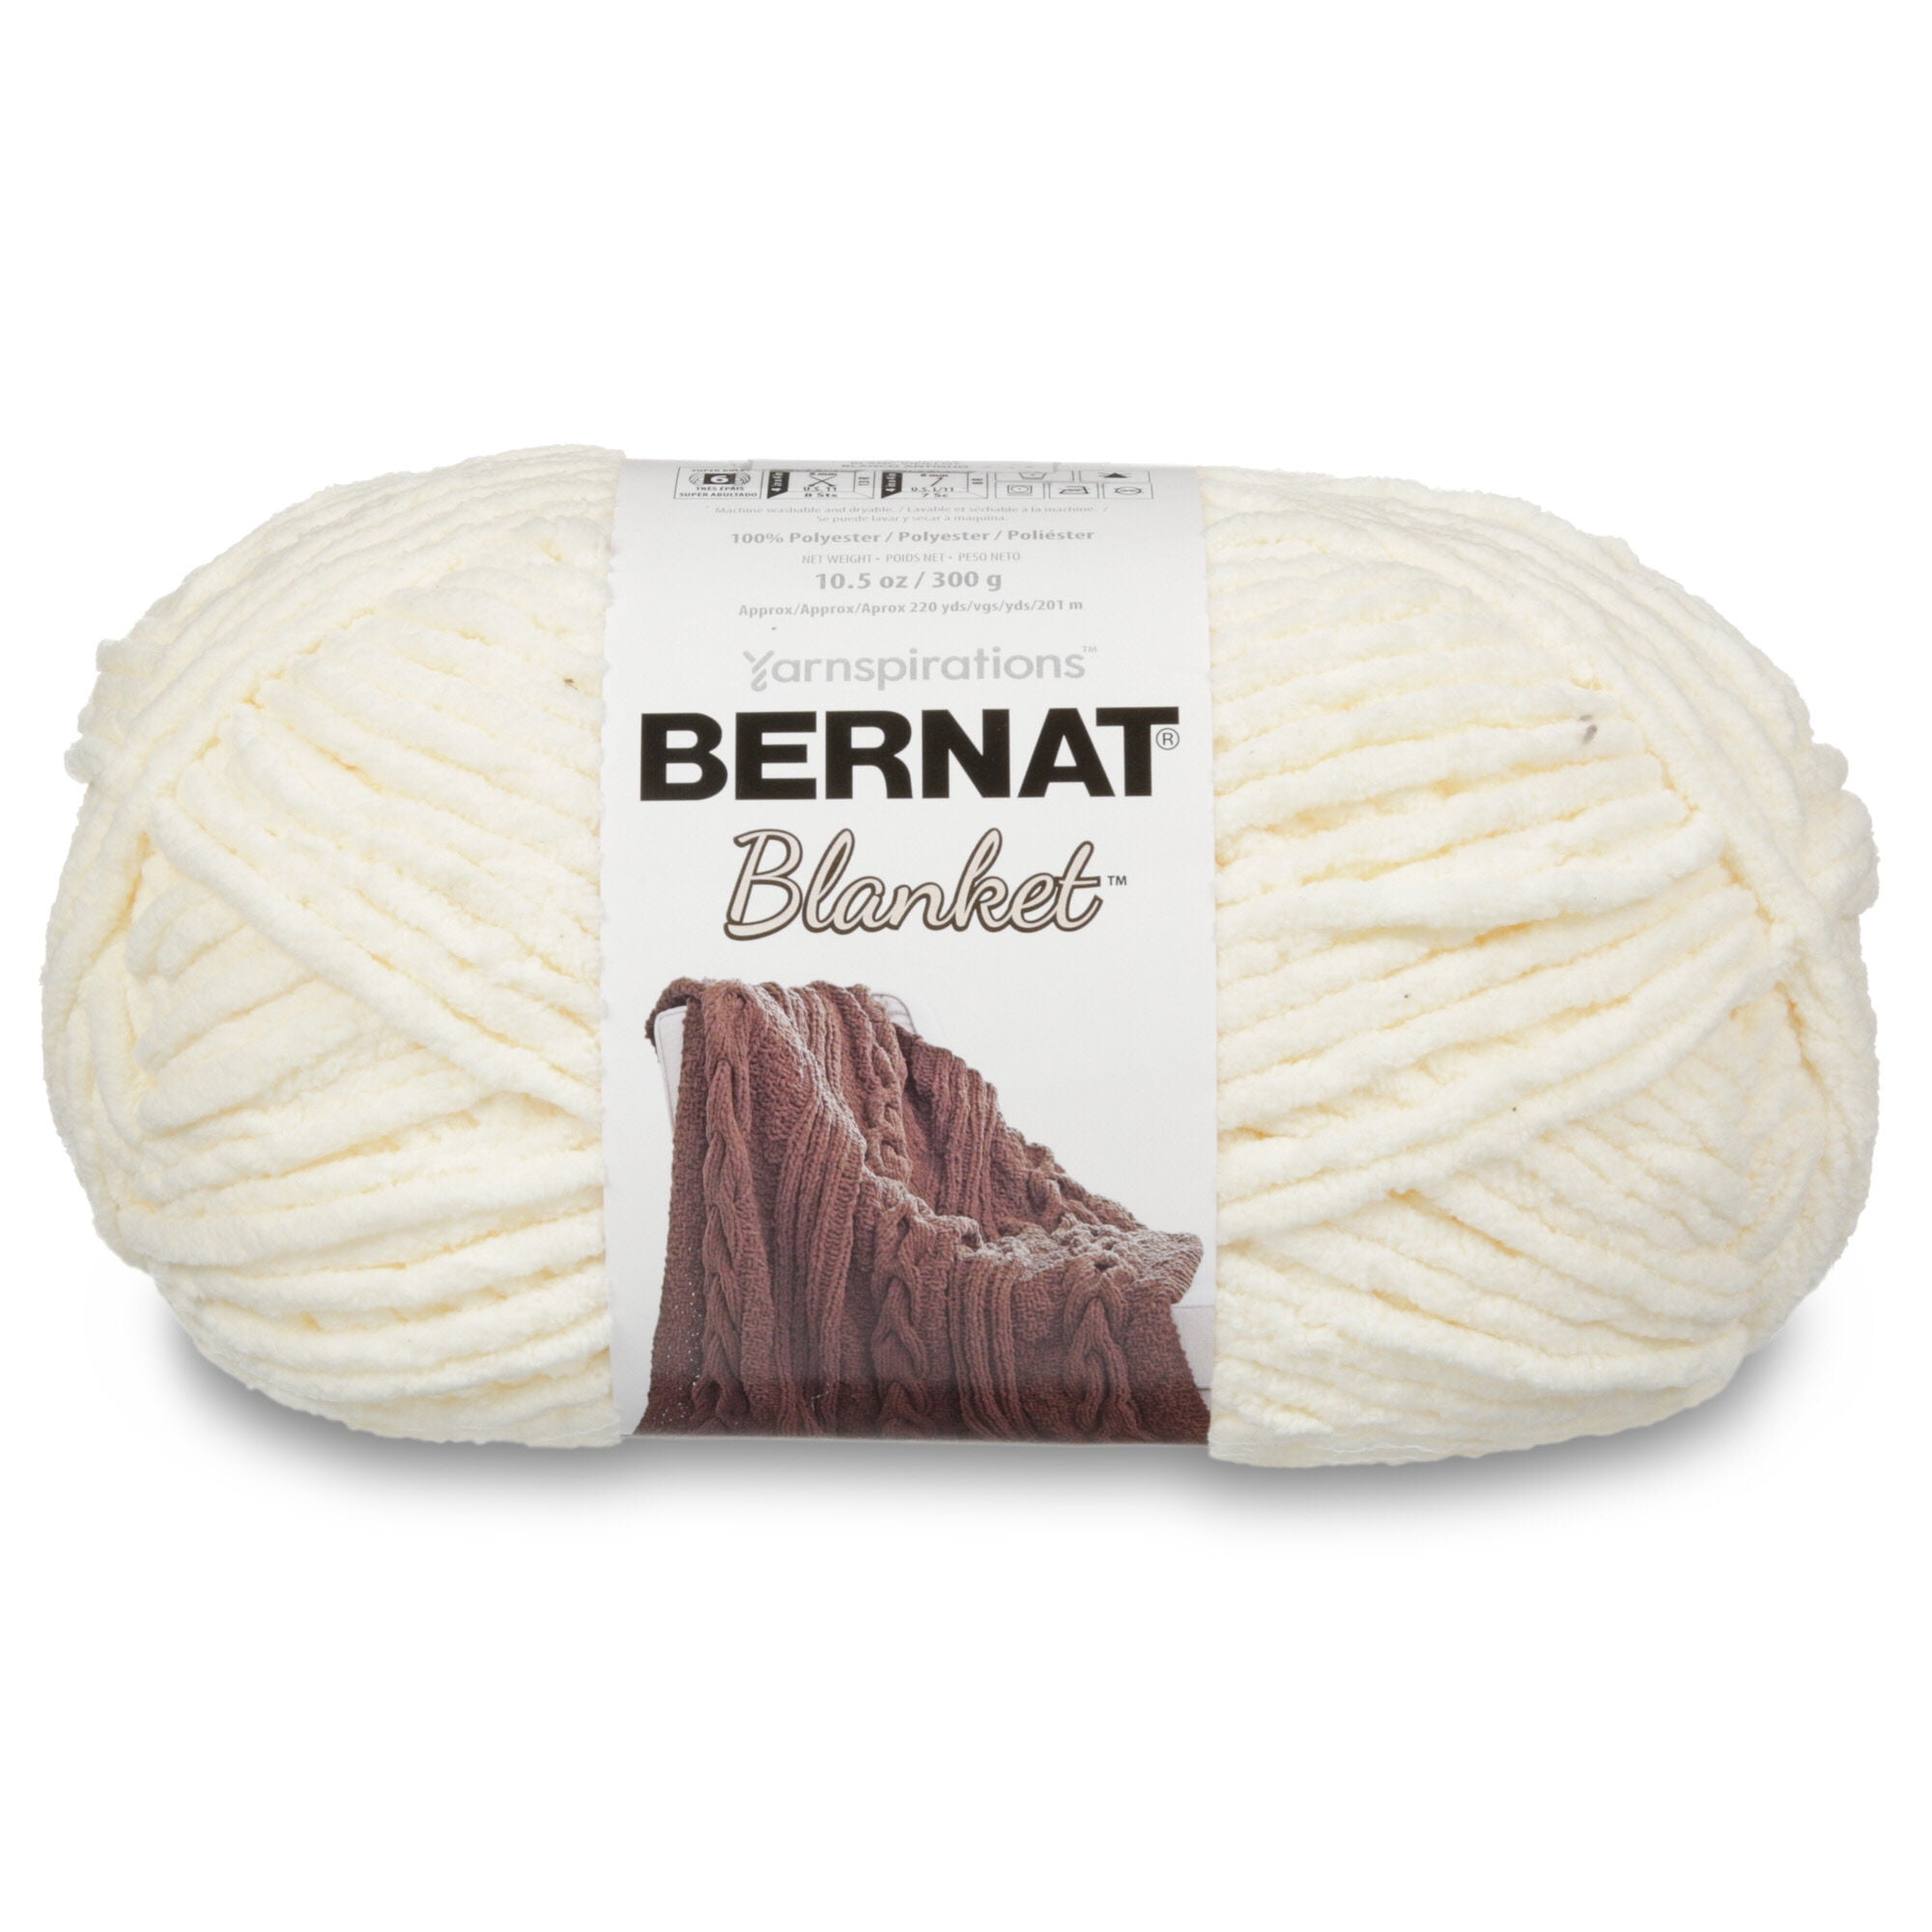 Bernat Blanket Extra Crimson Yarn - 2 Pack of 300g/10.5oz - Polyester - 7  Jumbo - 97 Yards 